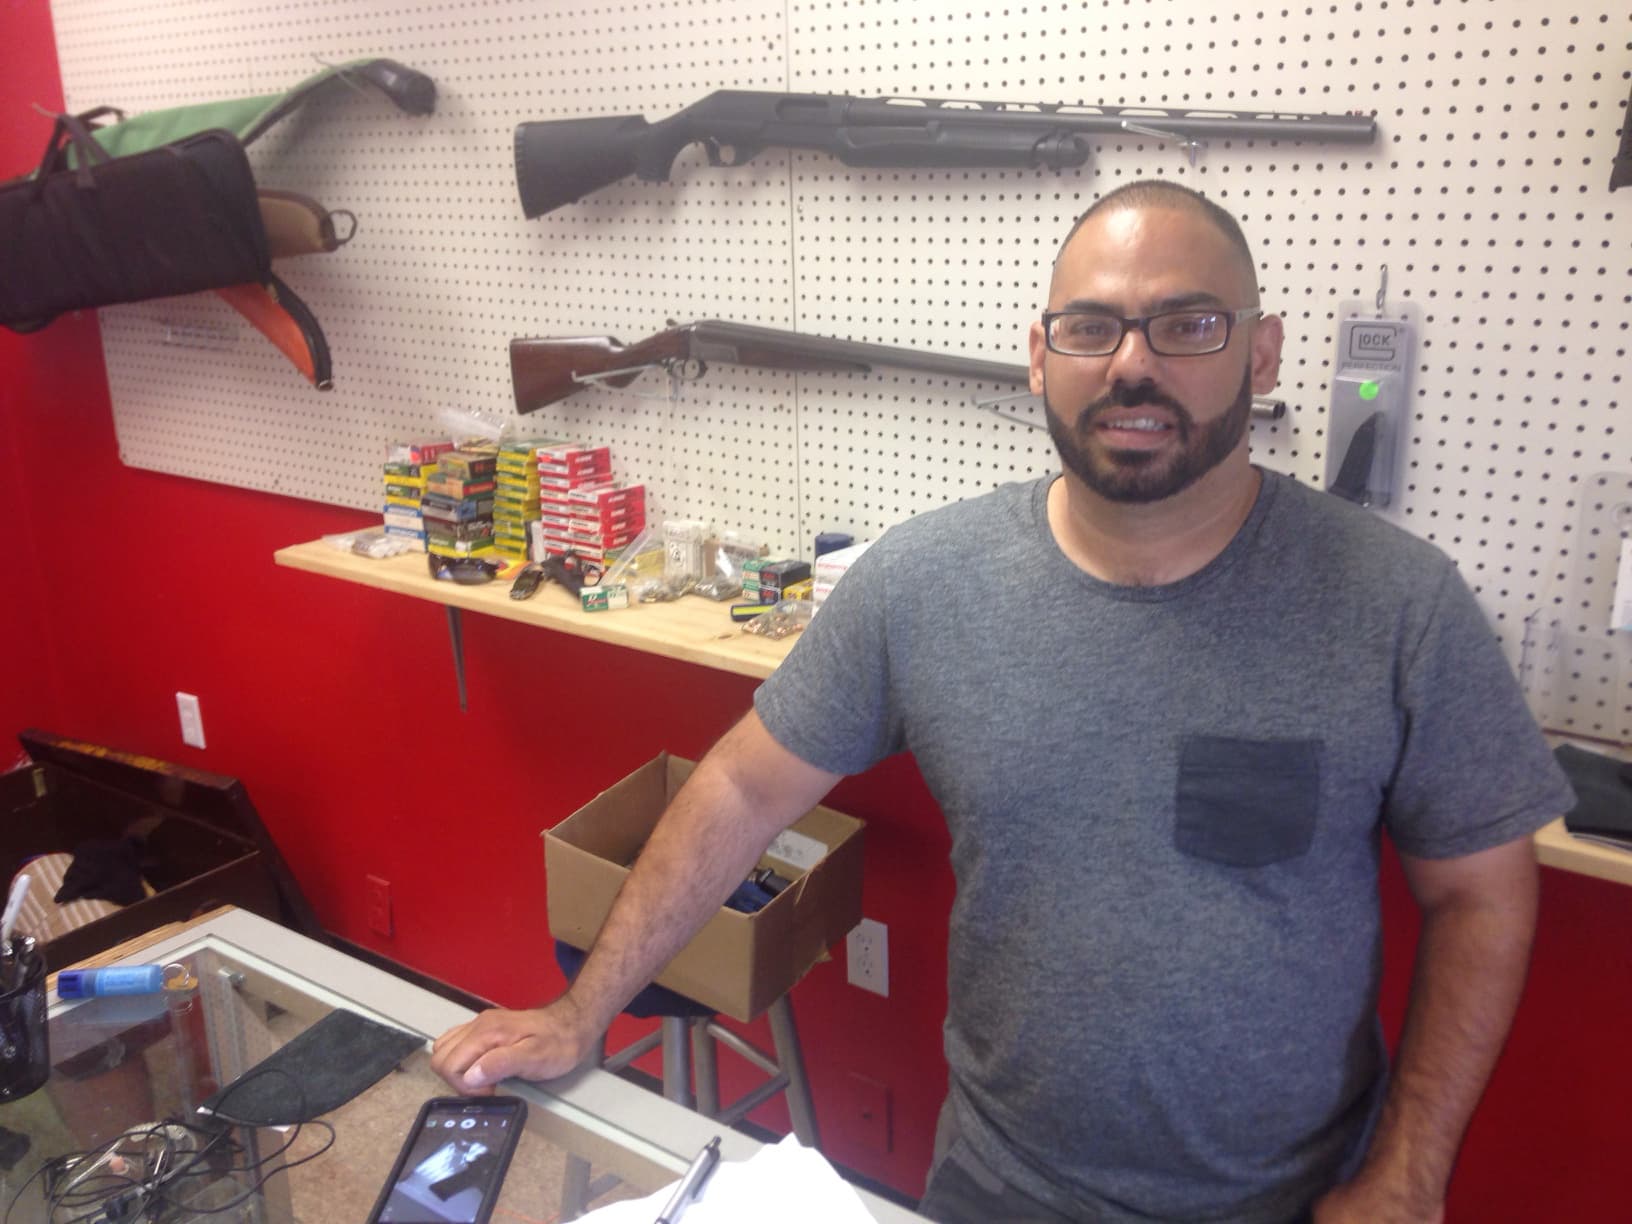 Orlando Gun Shop Owner Pulse Attack 'Had Nothing To Do